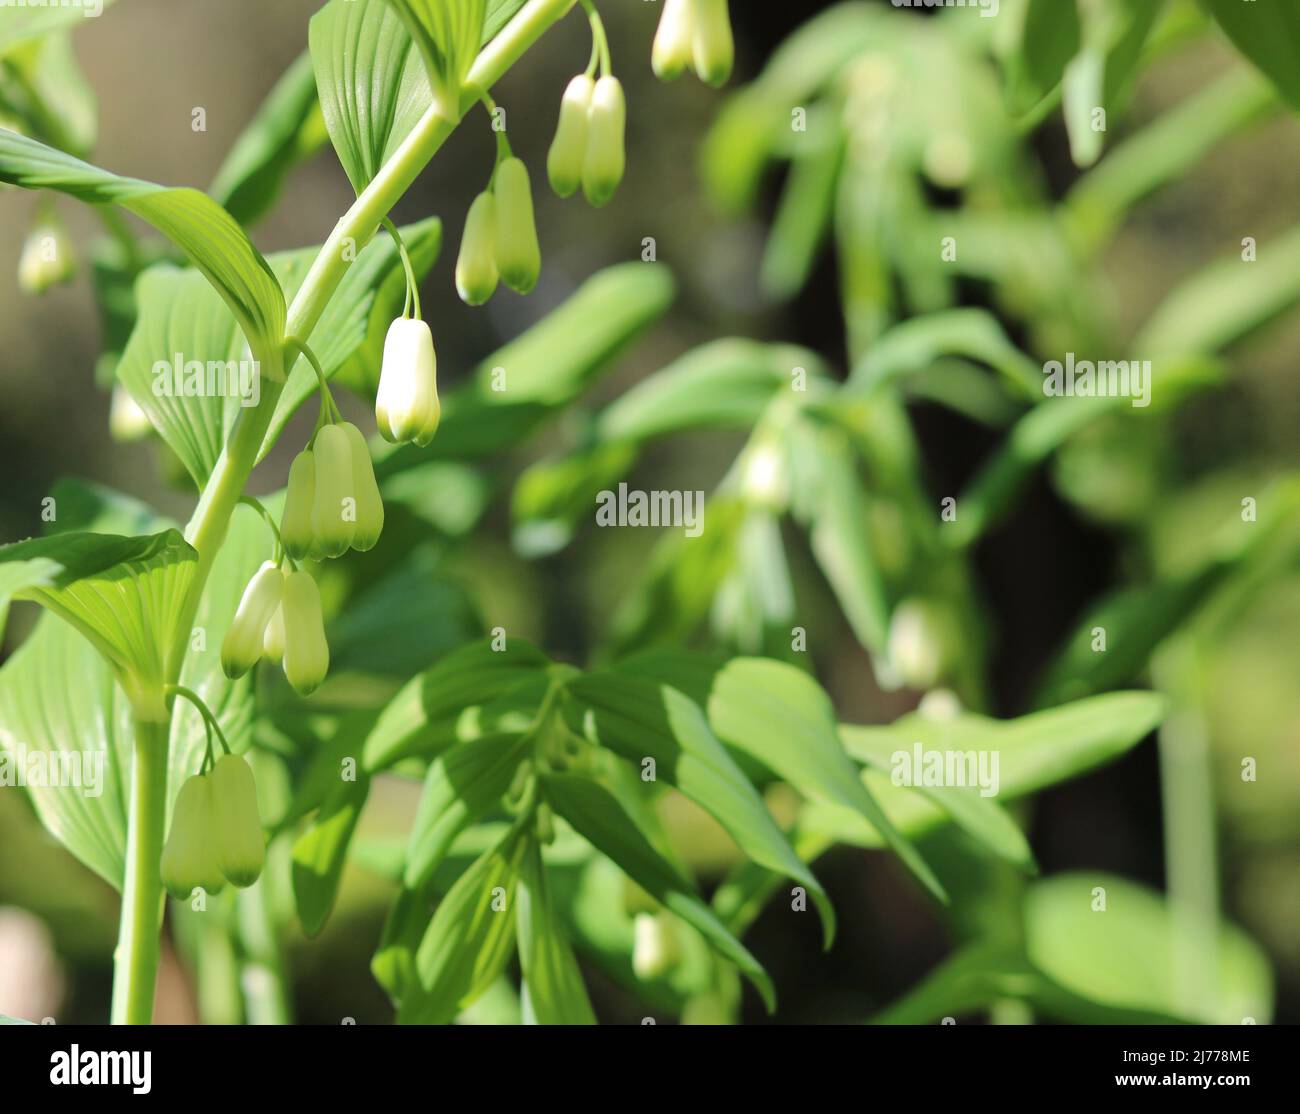 Full frame springtime image of polygonatum showing white flowers on stem Stock Photo